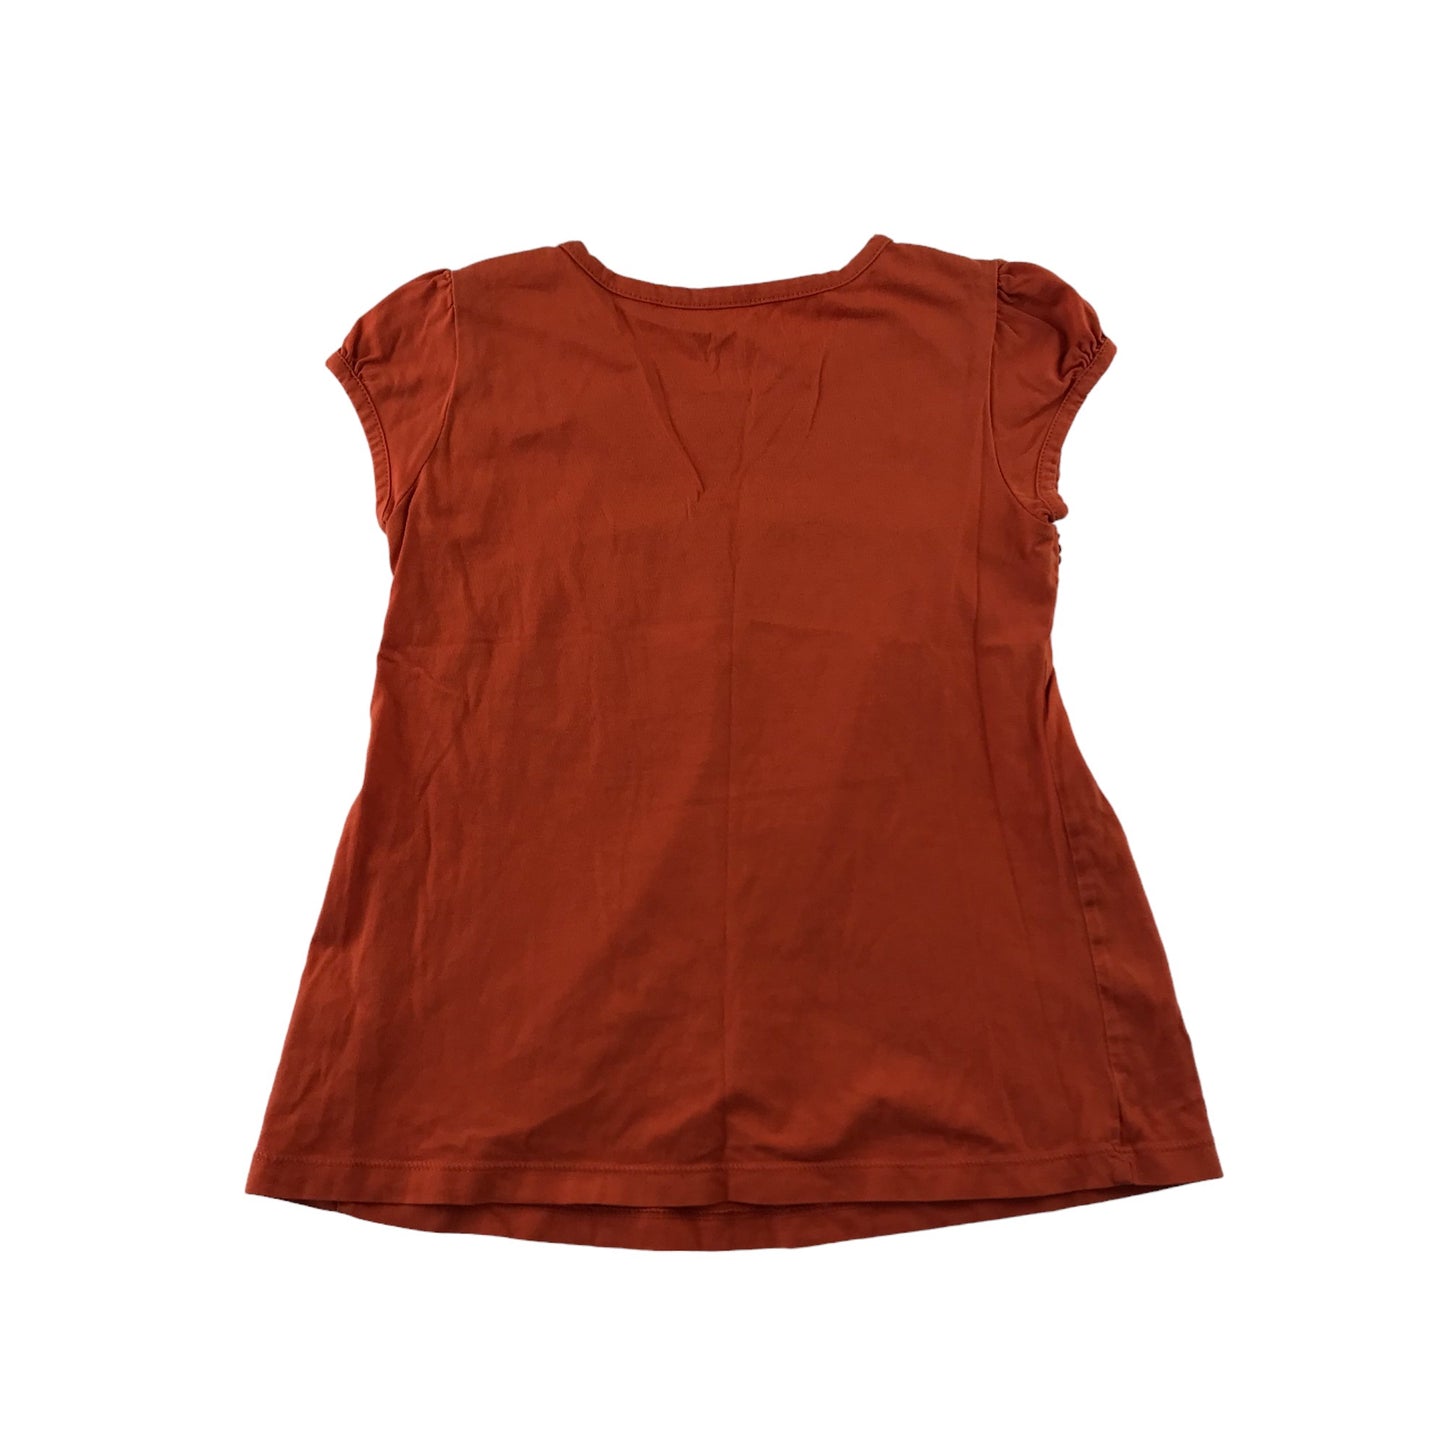 George T-shirt Age 8 Burnt Orange with Sequin Details Cotton